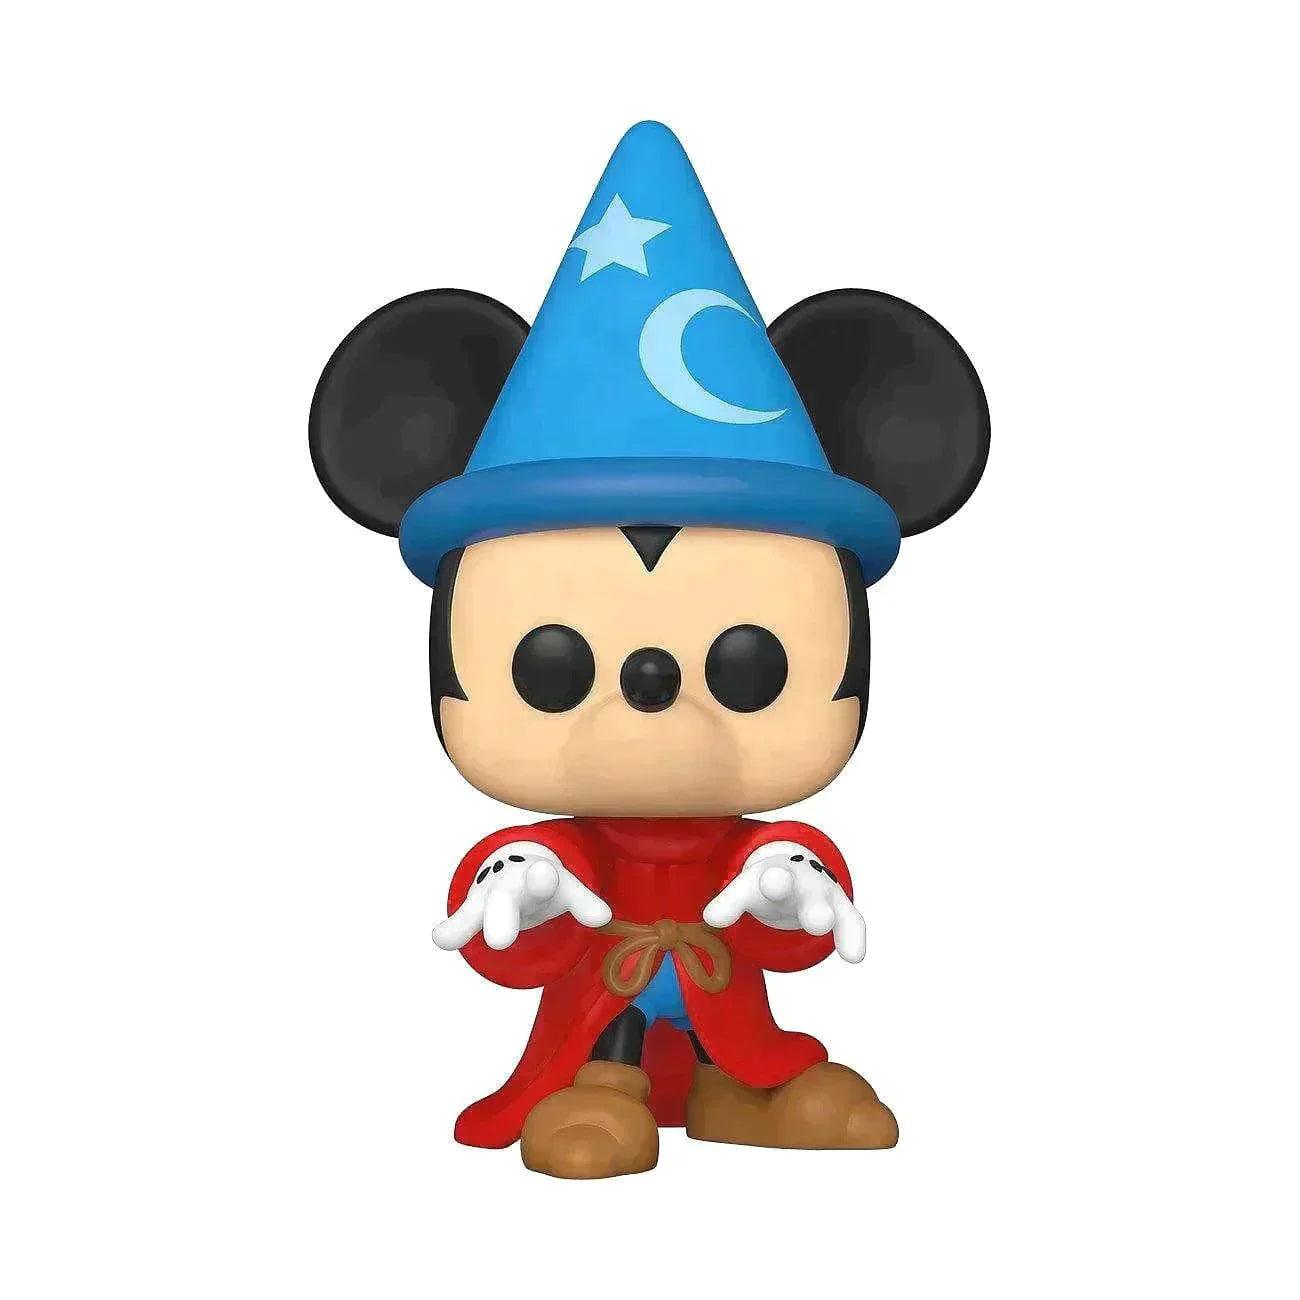 Funko Pop! 990 Fantasia 80th Anniversary Figure Sorcerer Mickey FUN 51938 | 2TTOYS ✓ Official shop<br>